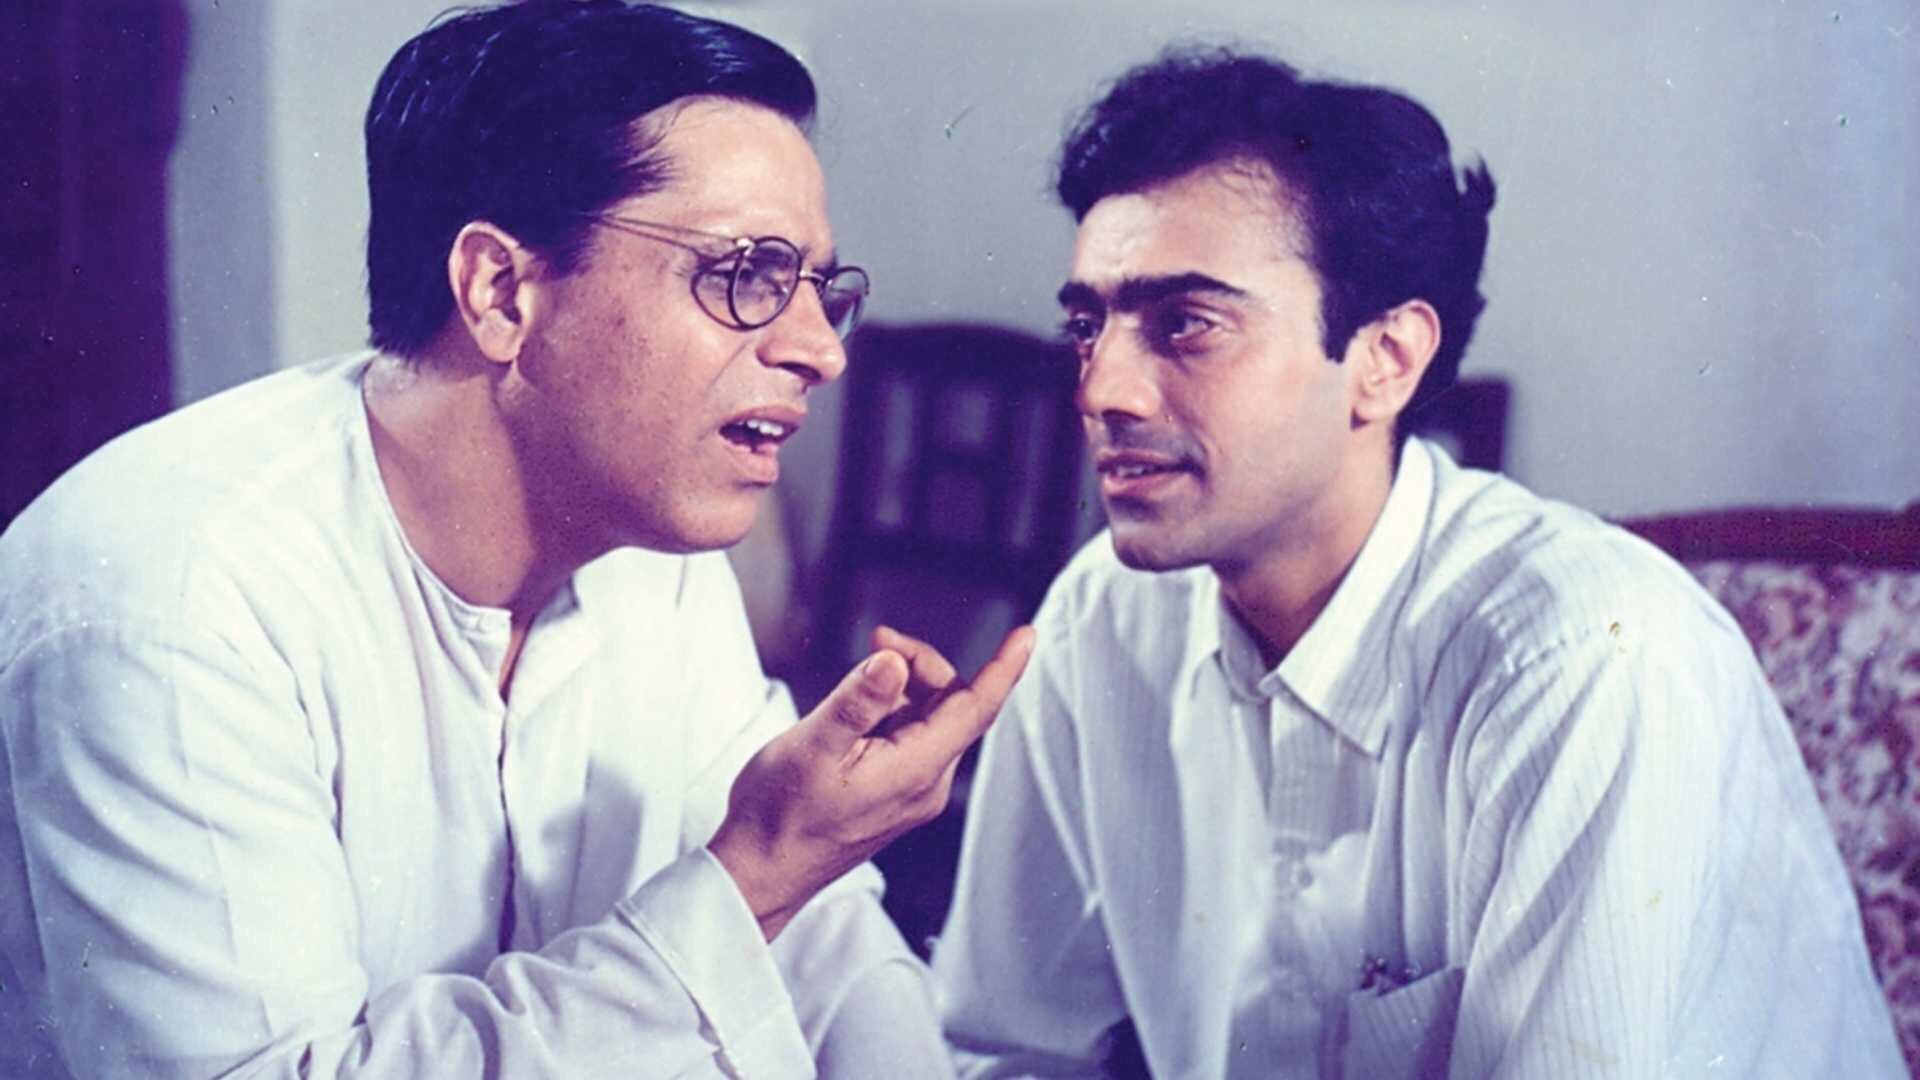 Film History Pics - (1993) 'Byomkesh Bakshi' series based on character created by Sharadindu Bandyopadhyay & directed by Basu Chatterjee. Rajit Kapur born on this day. Here with KK